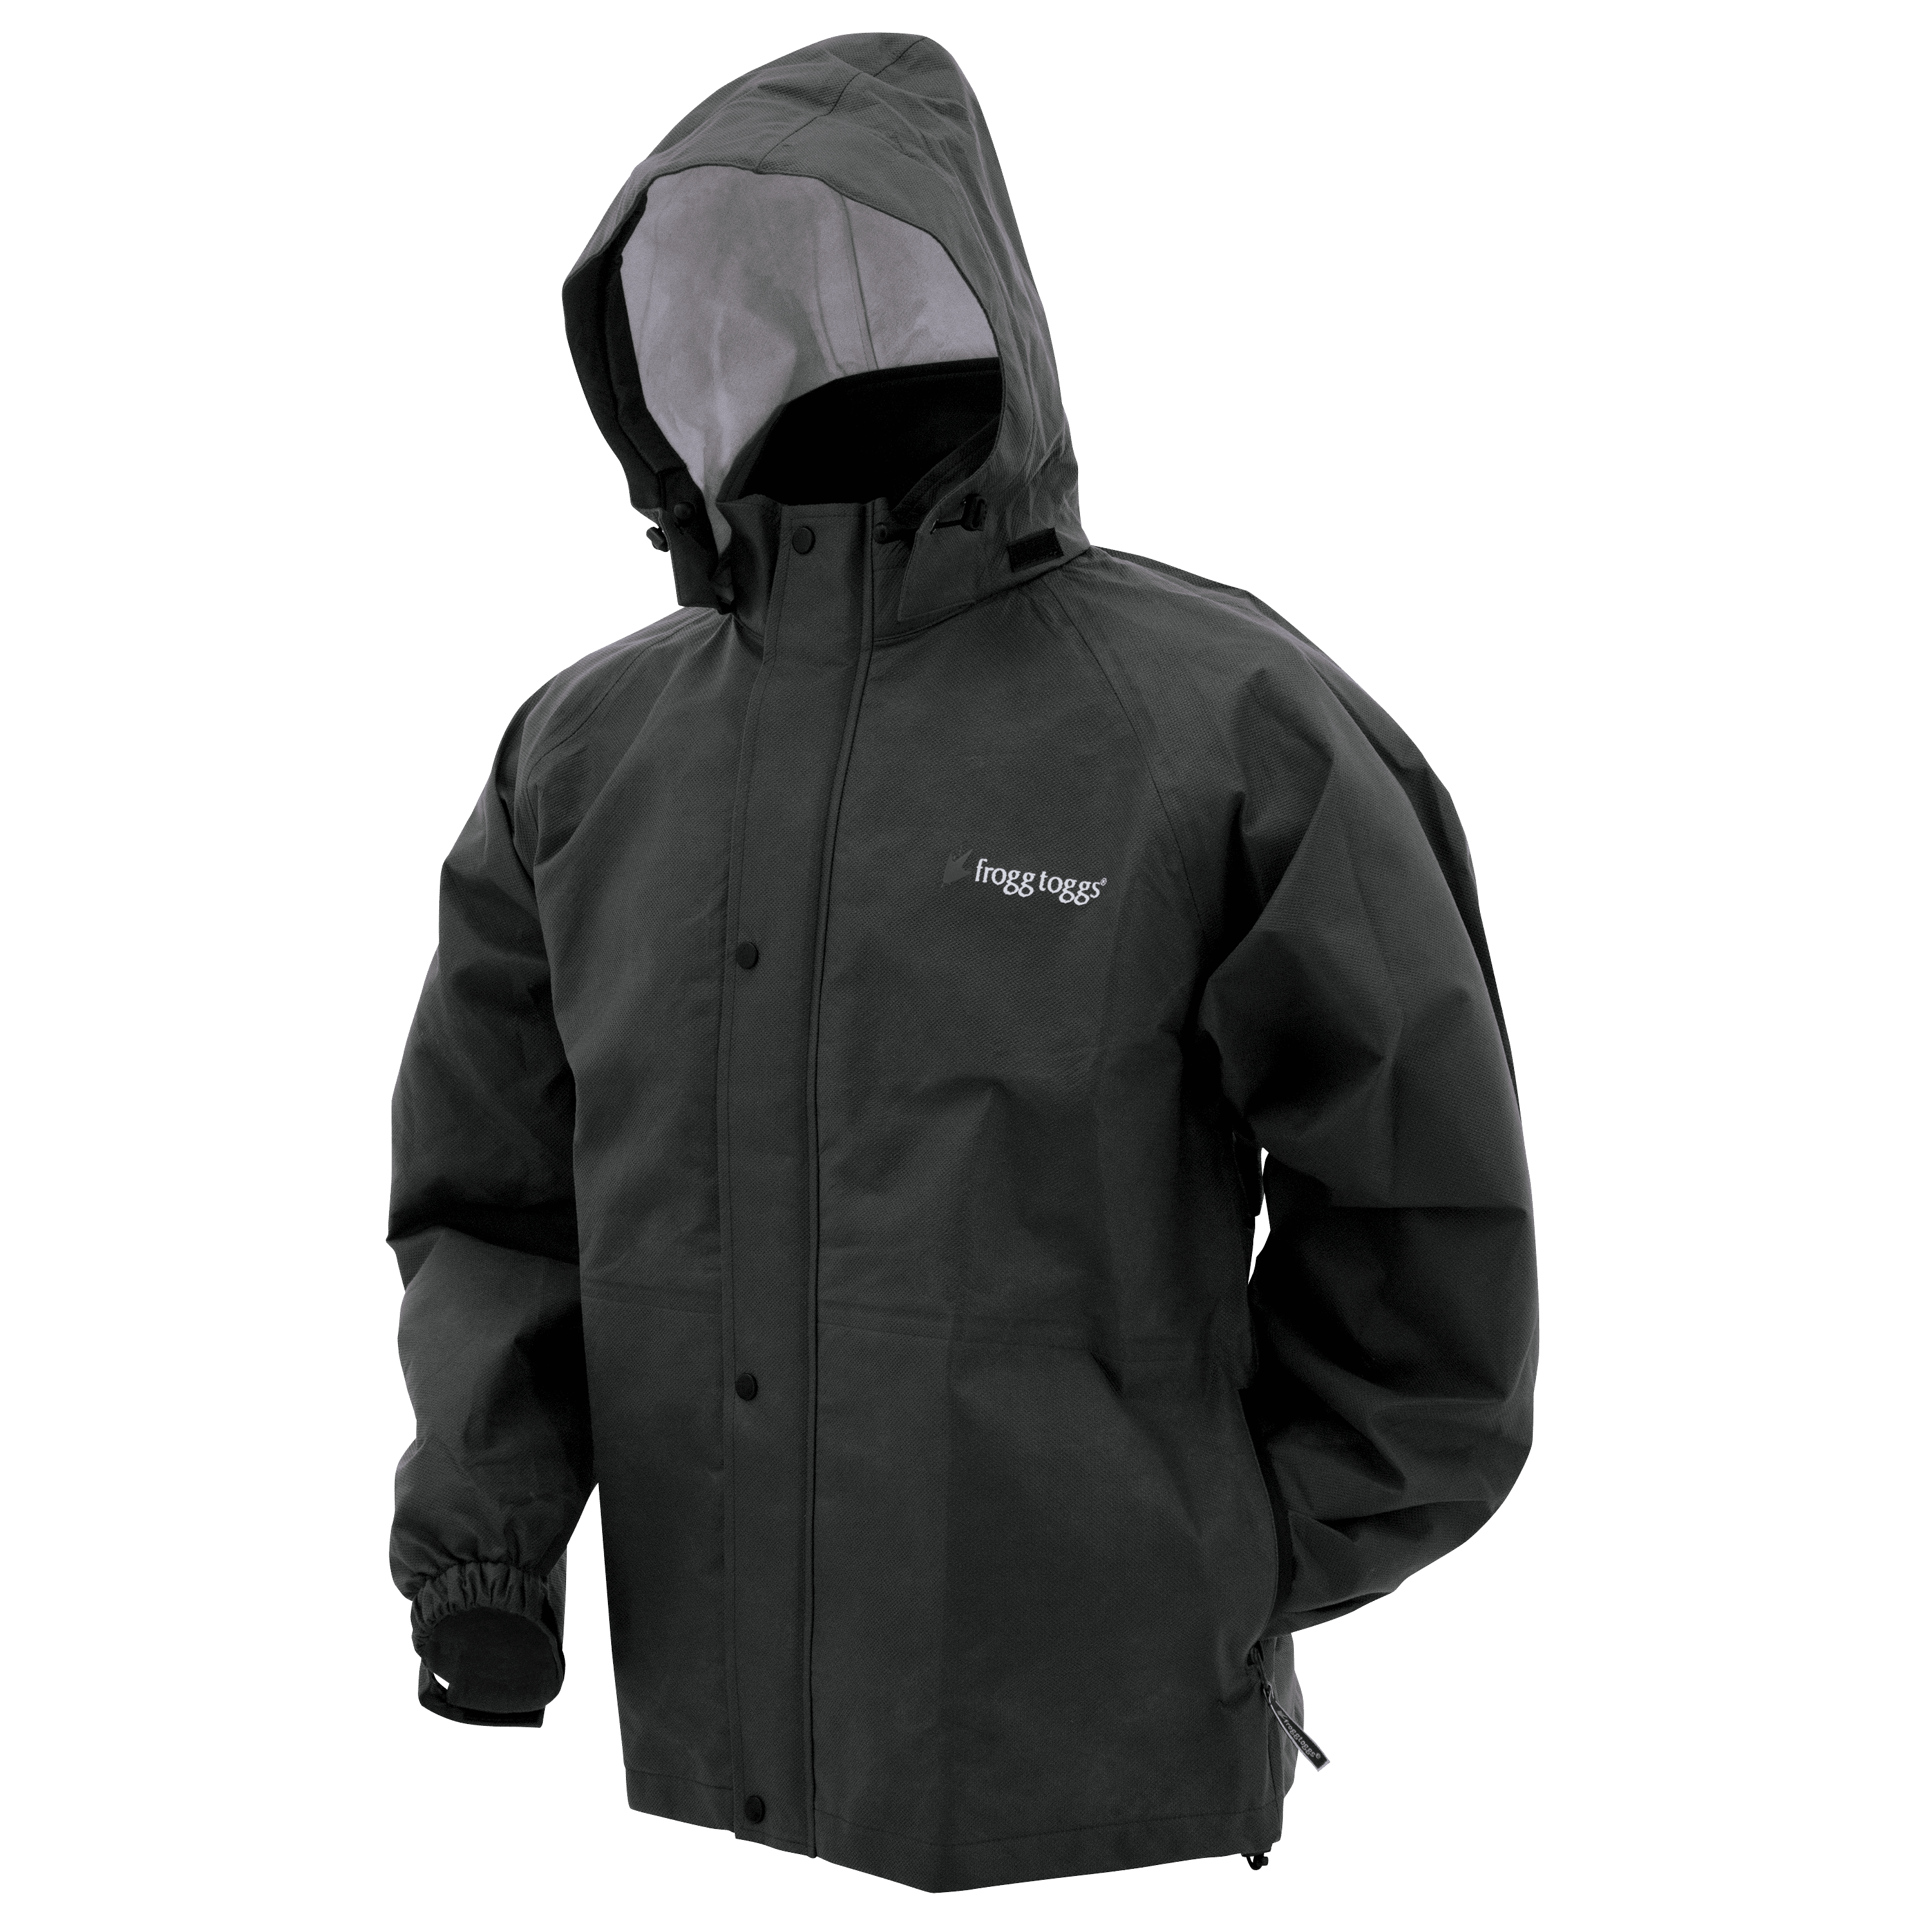 FROGG TOGGS Unisex Pro Action/Advantage Rain Jacket Pro Action Advantage Jacket 